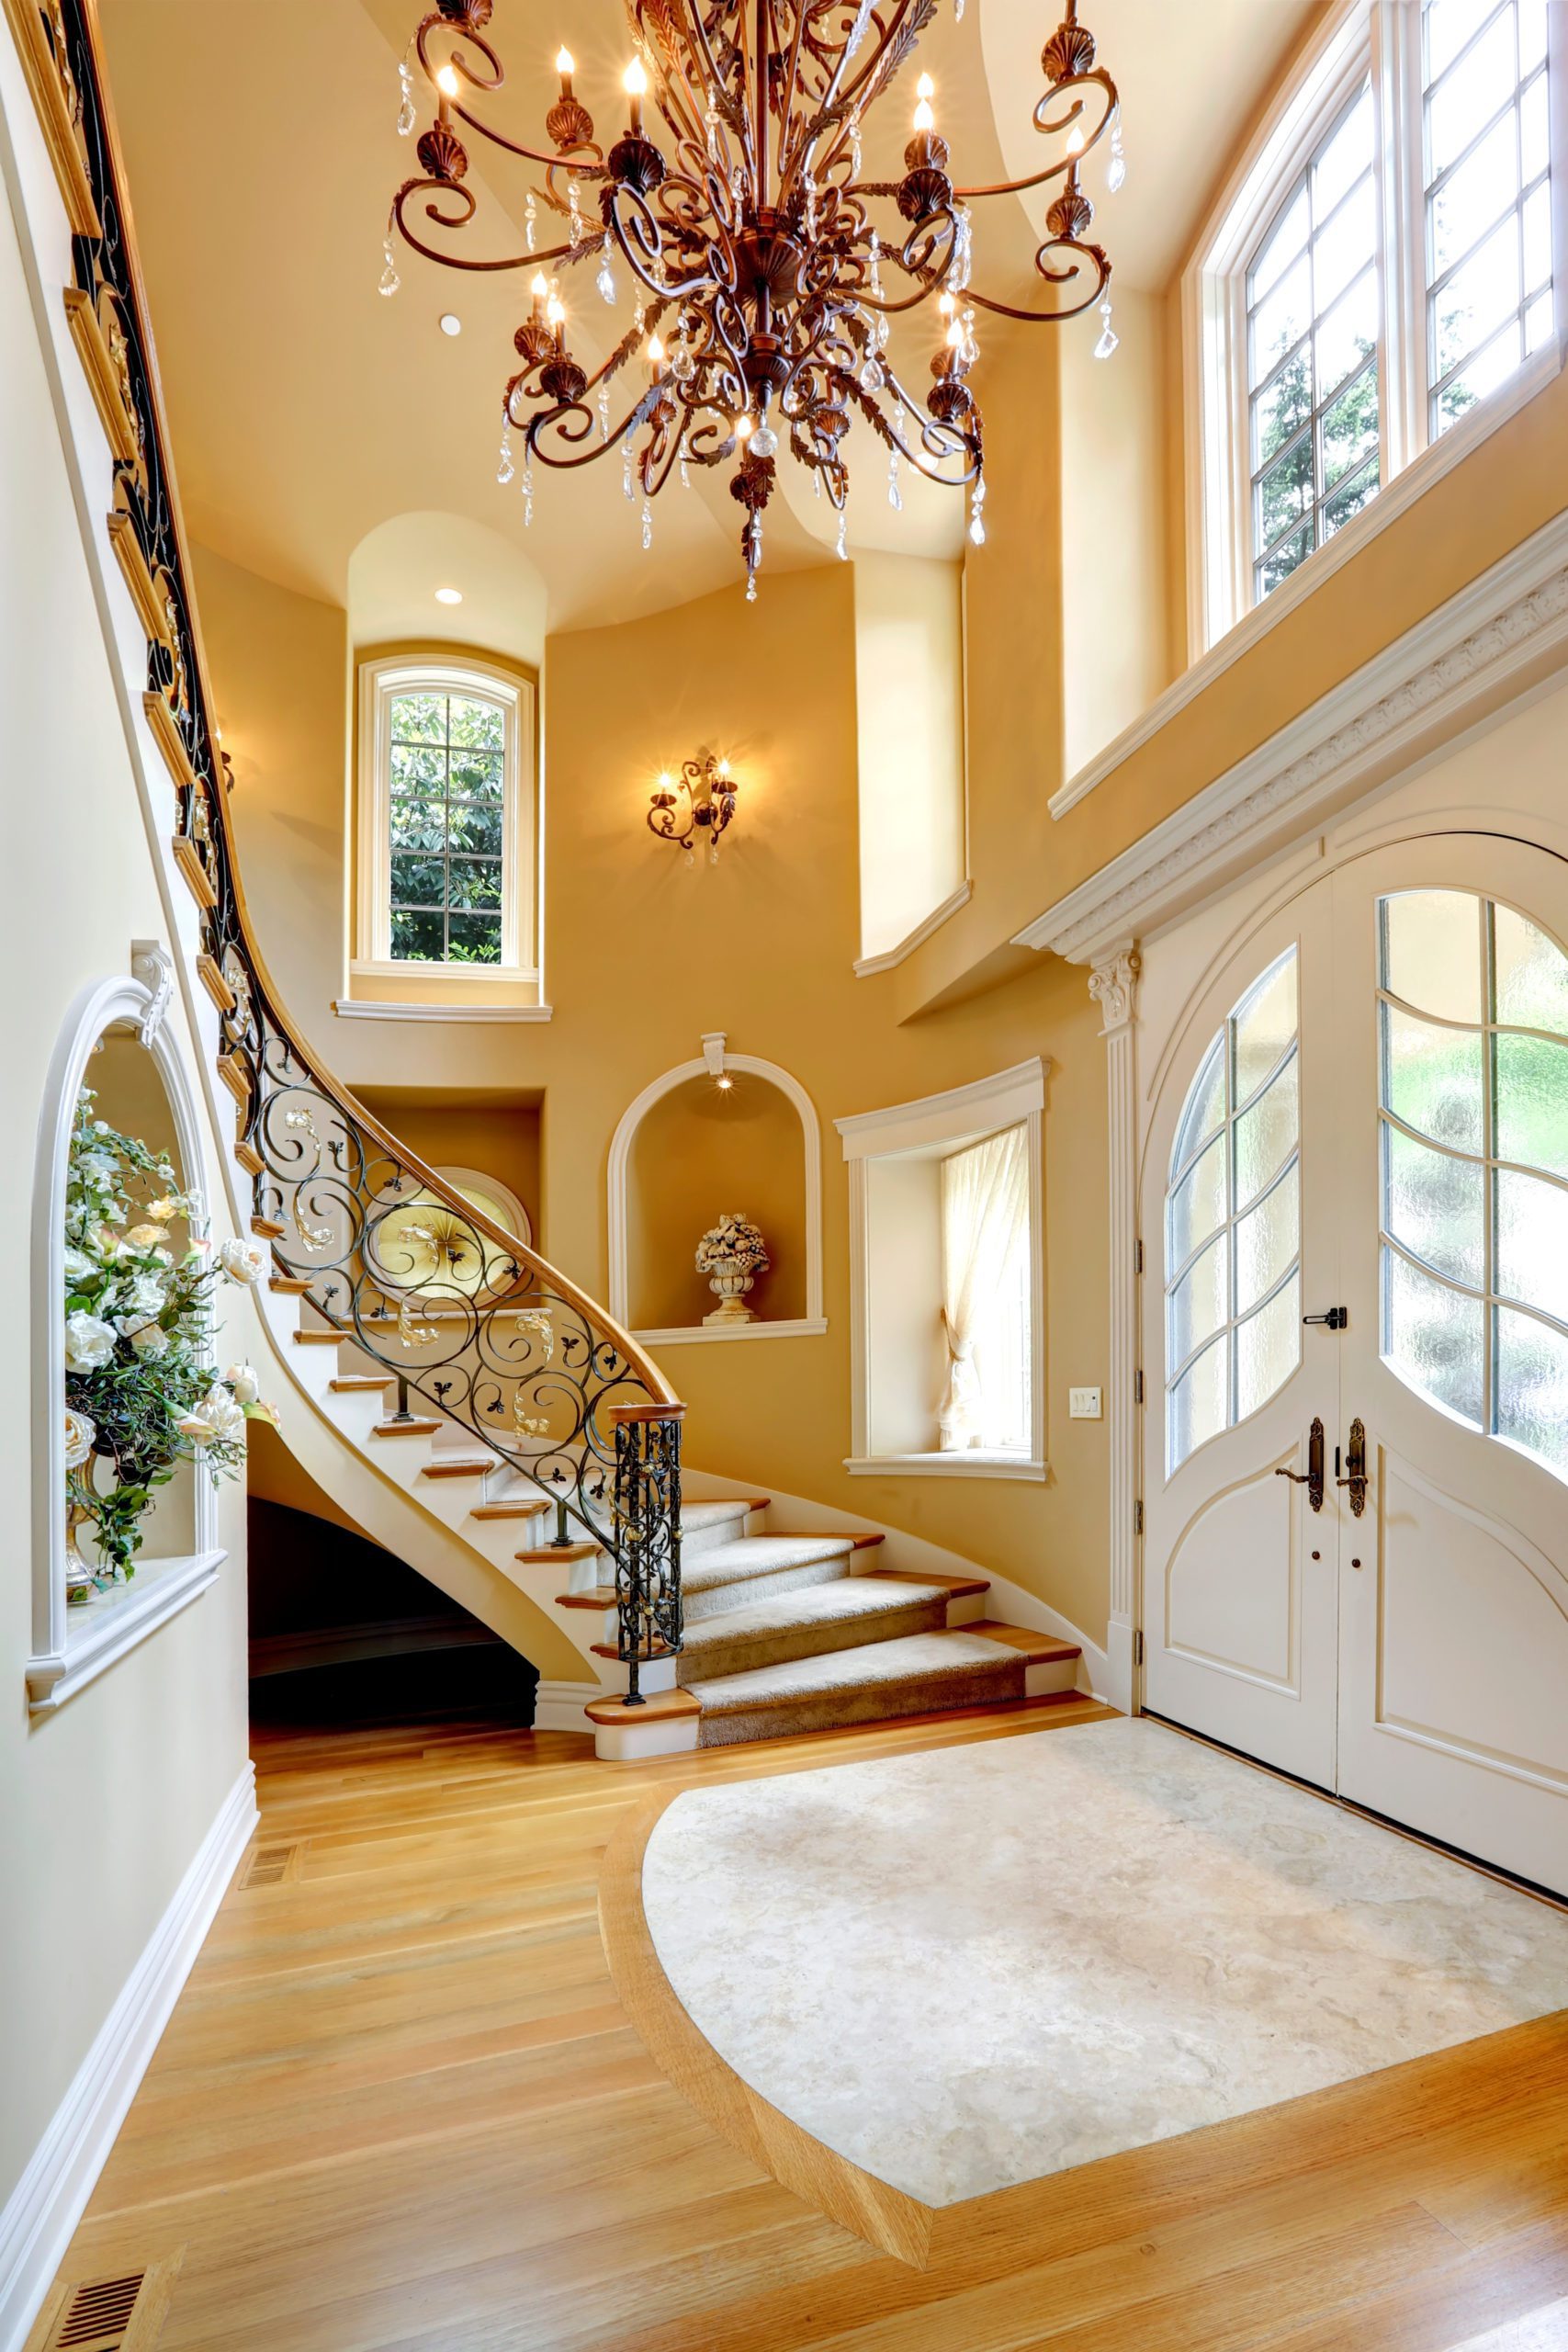 Luxury House Interior. Entrance Hallway